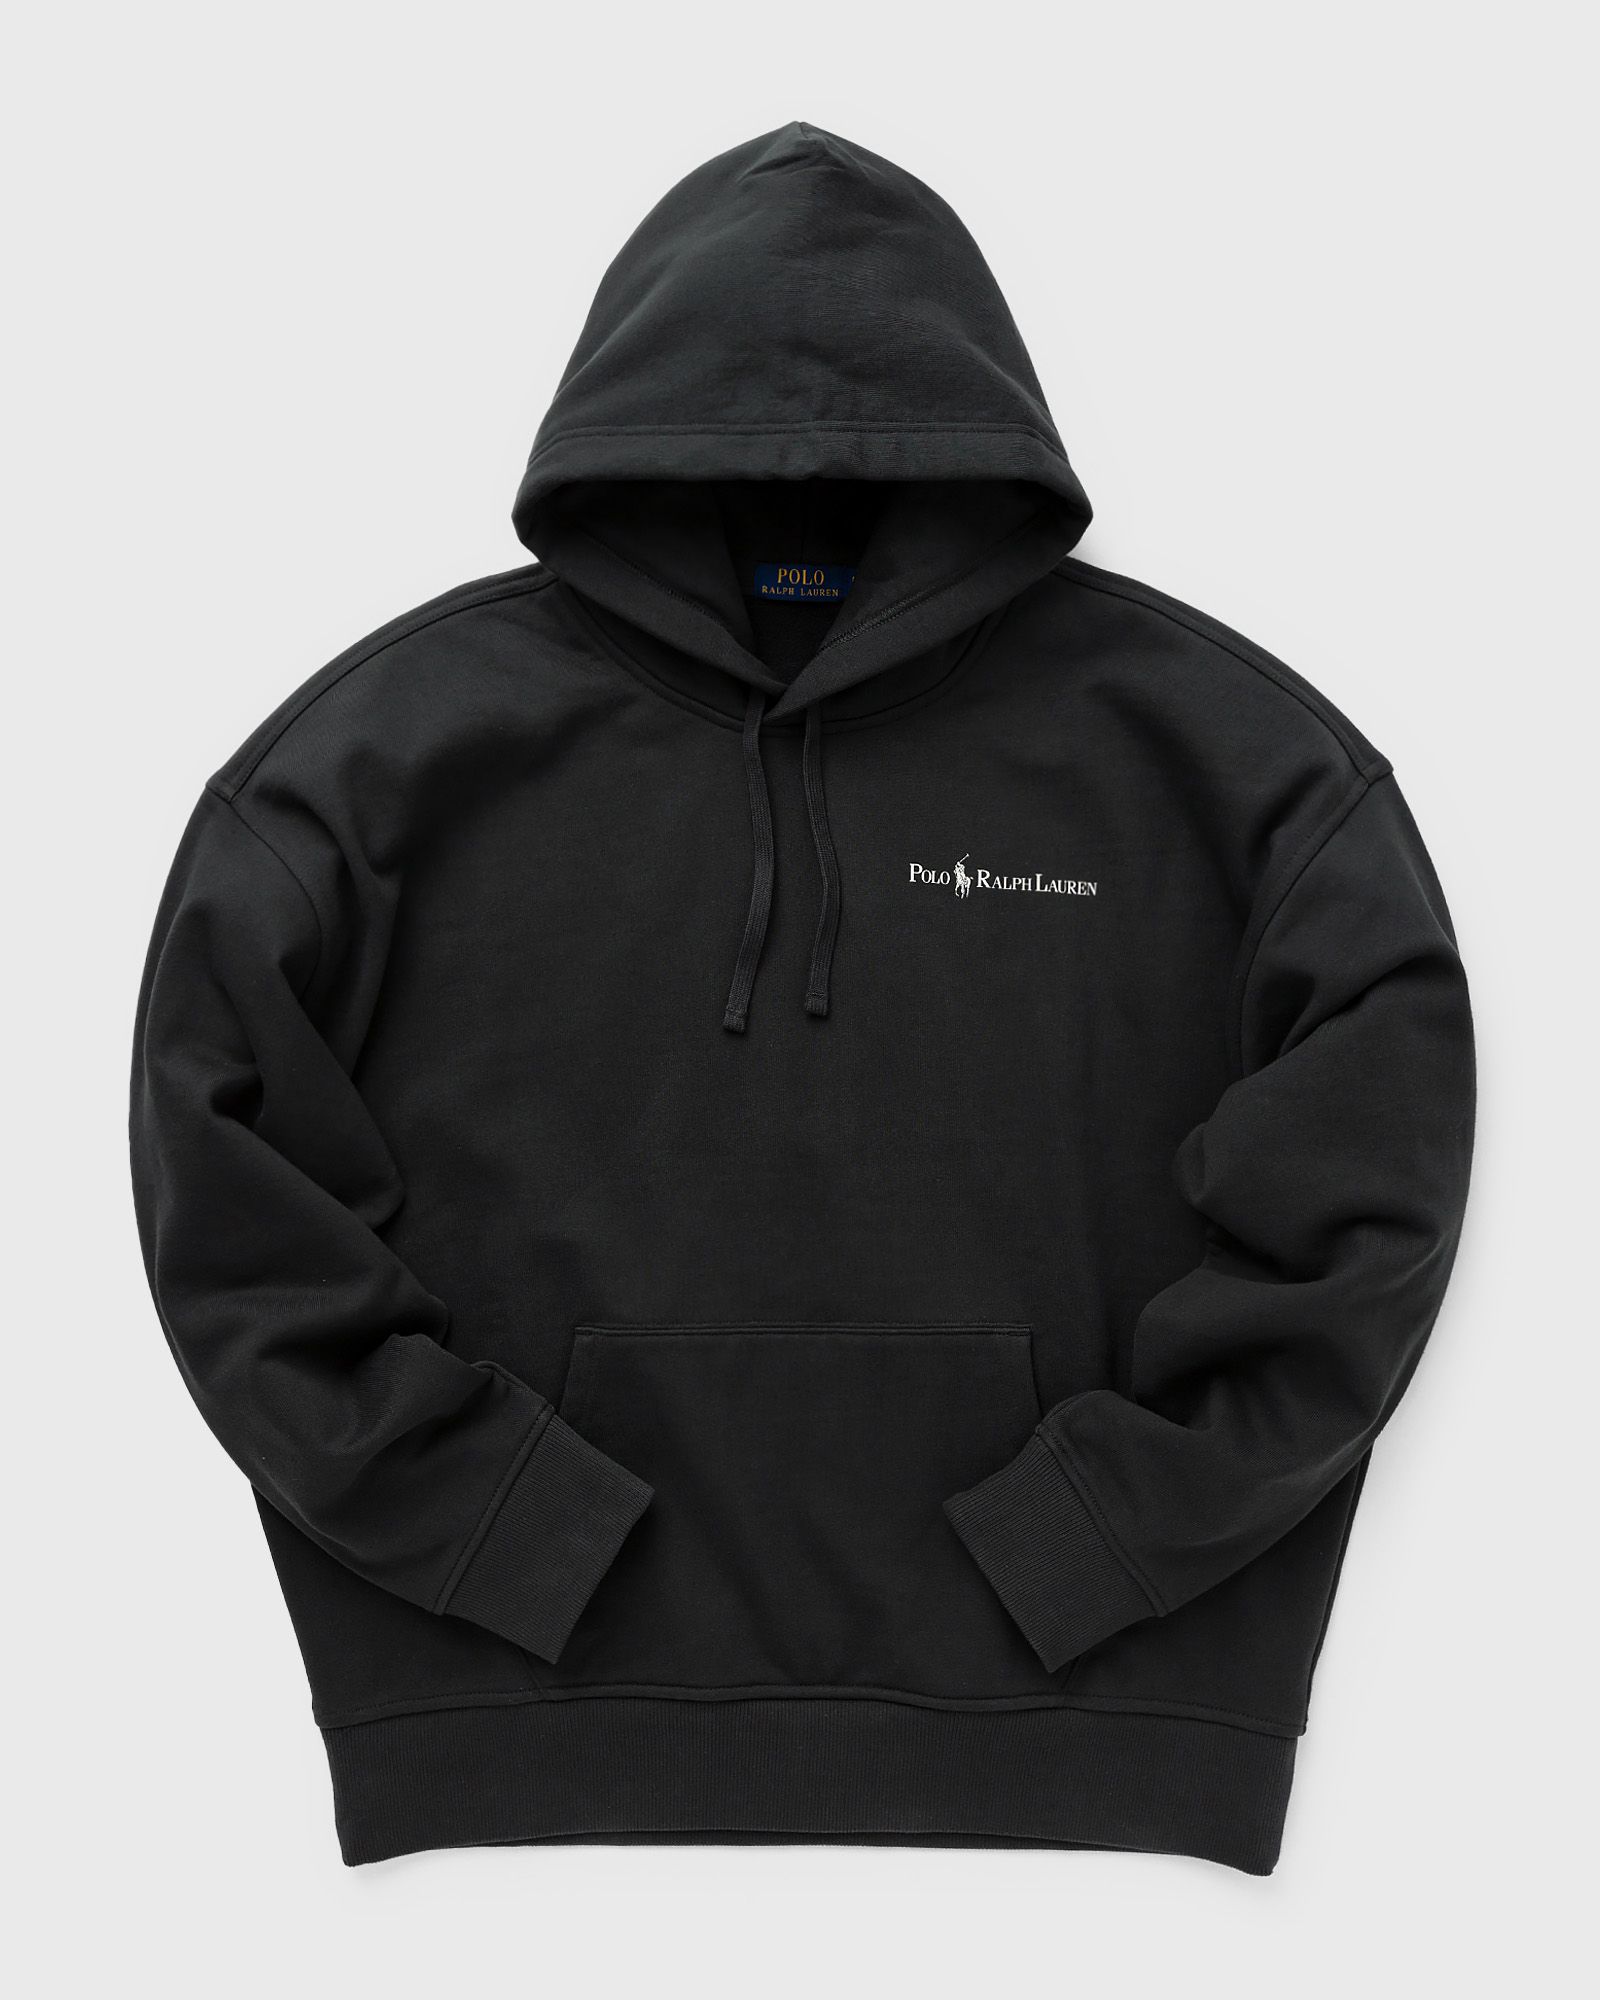 Polo Ralph Lauren - long sleeve-sweatshirt men hoodies black in größe:xxl